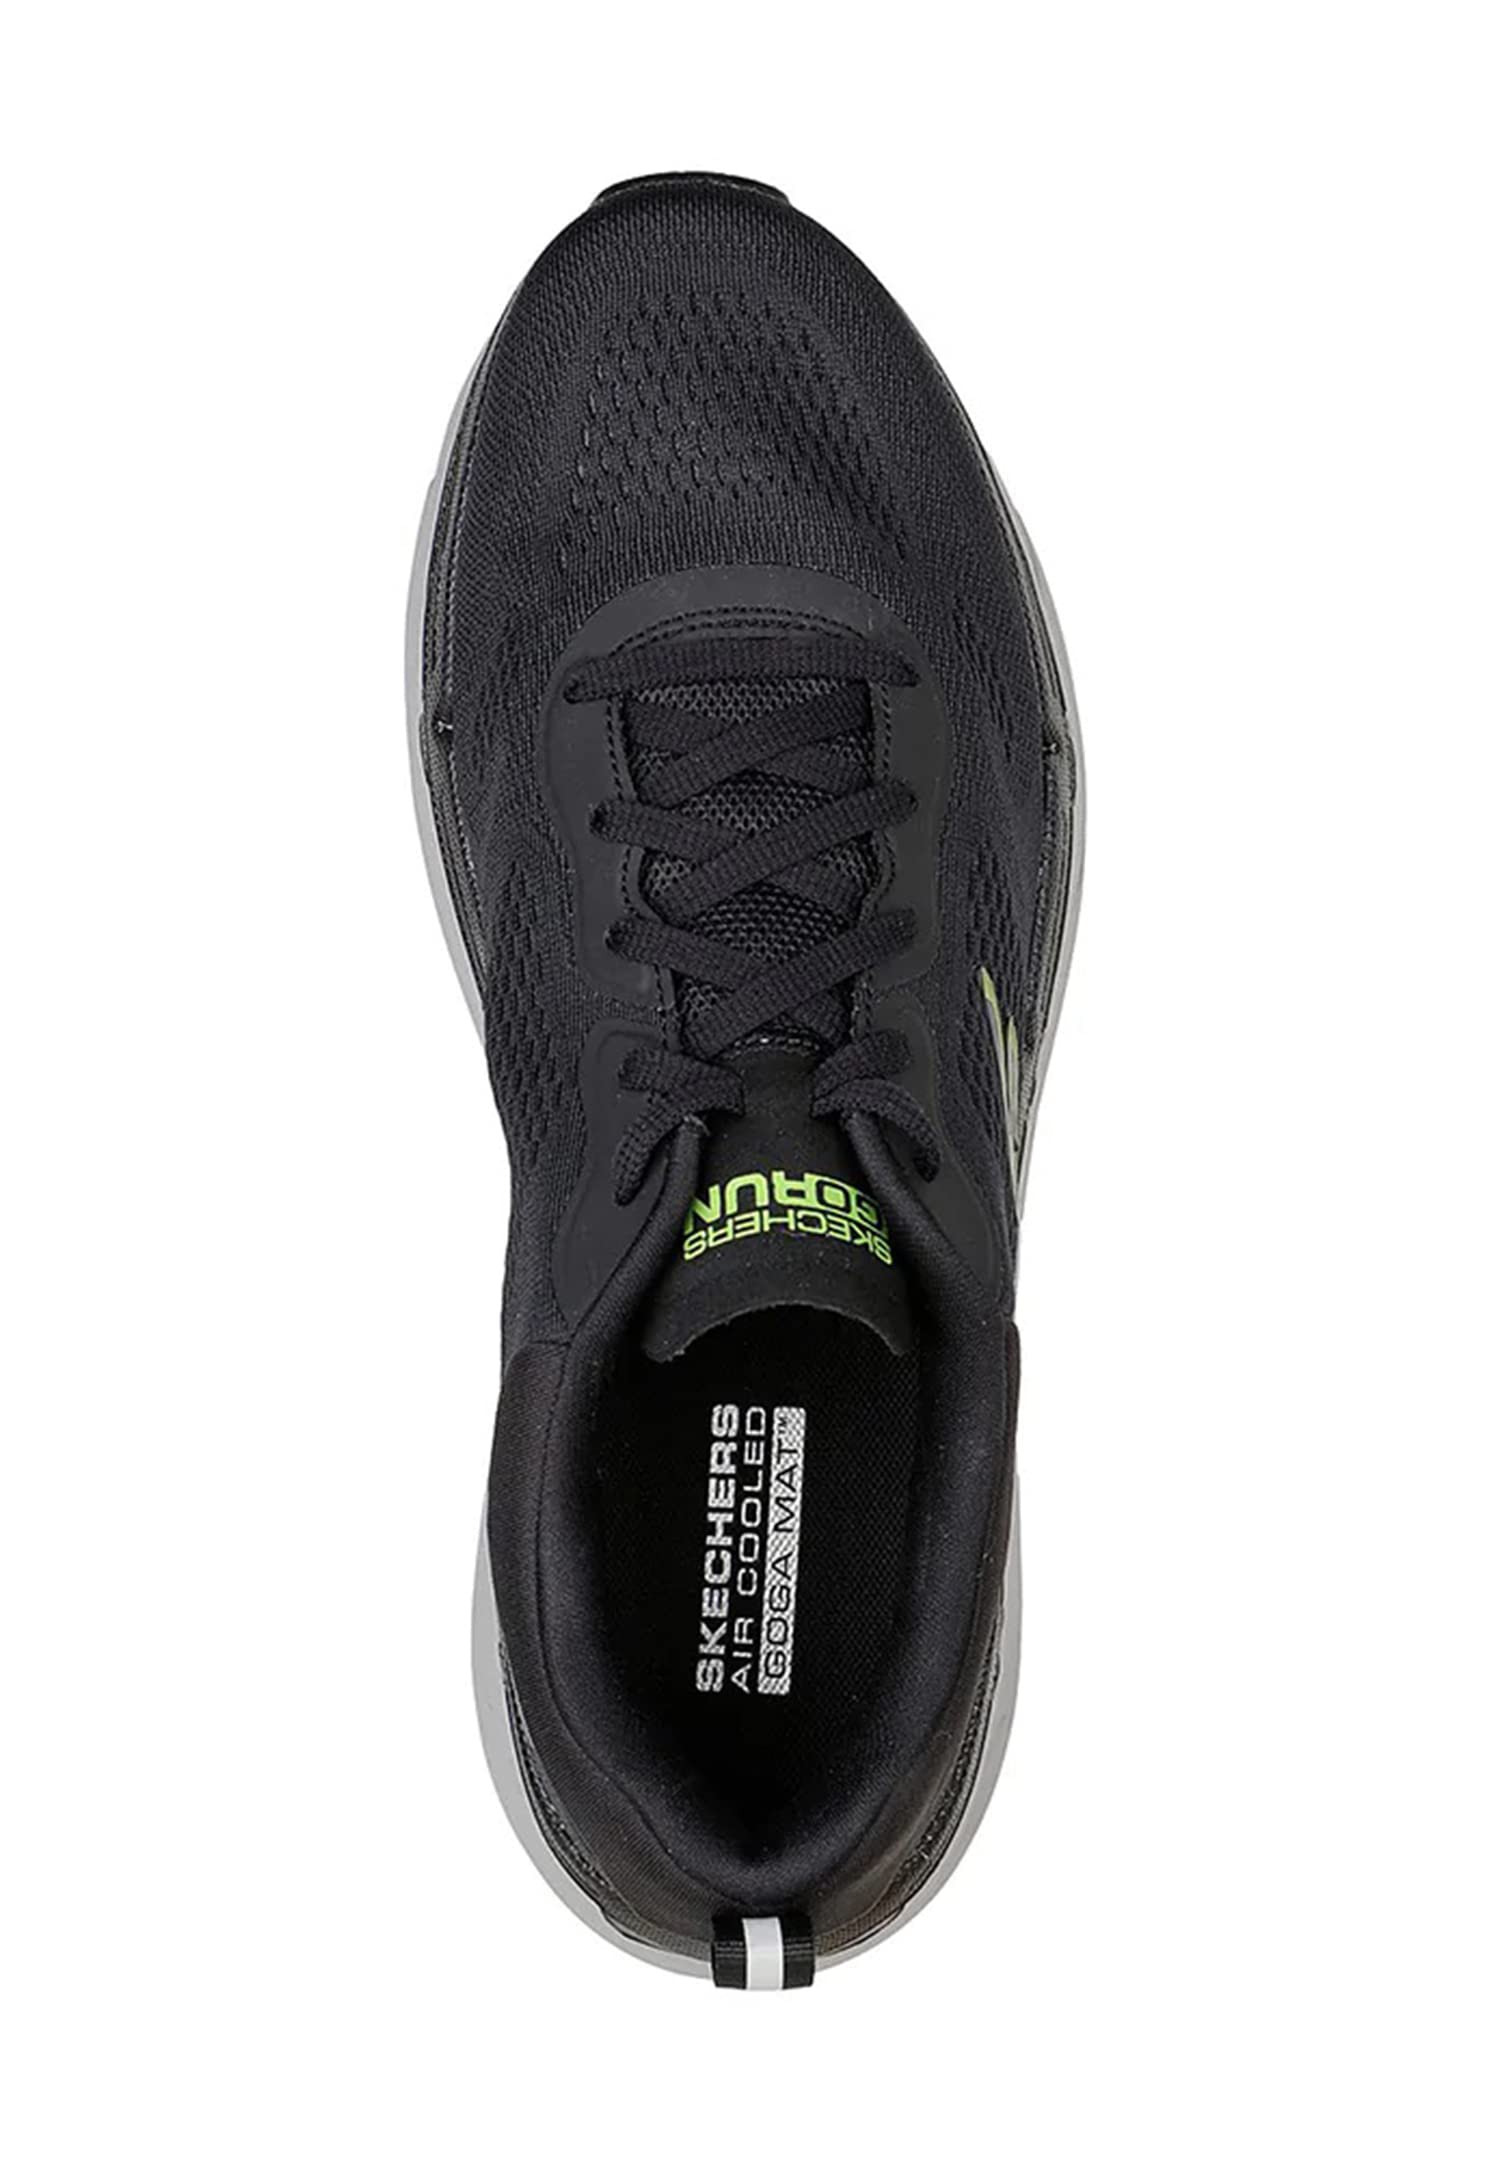 Skechers Men's Road Running Shoe, Black and Lime Textile, 10